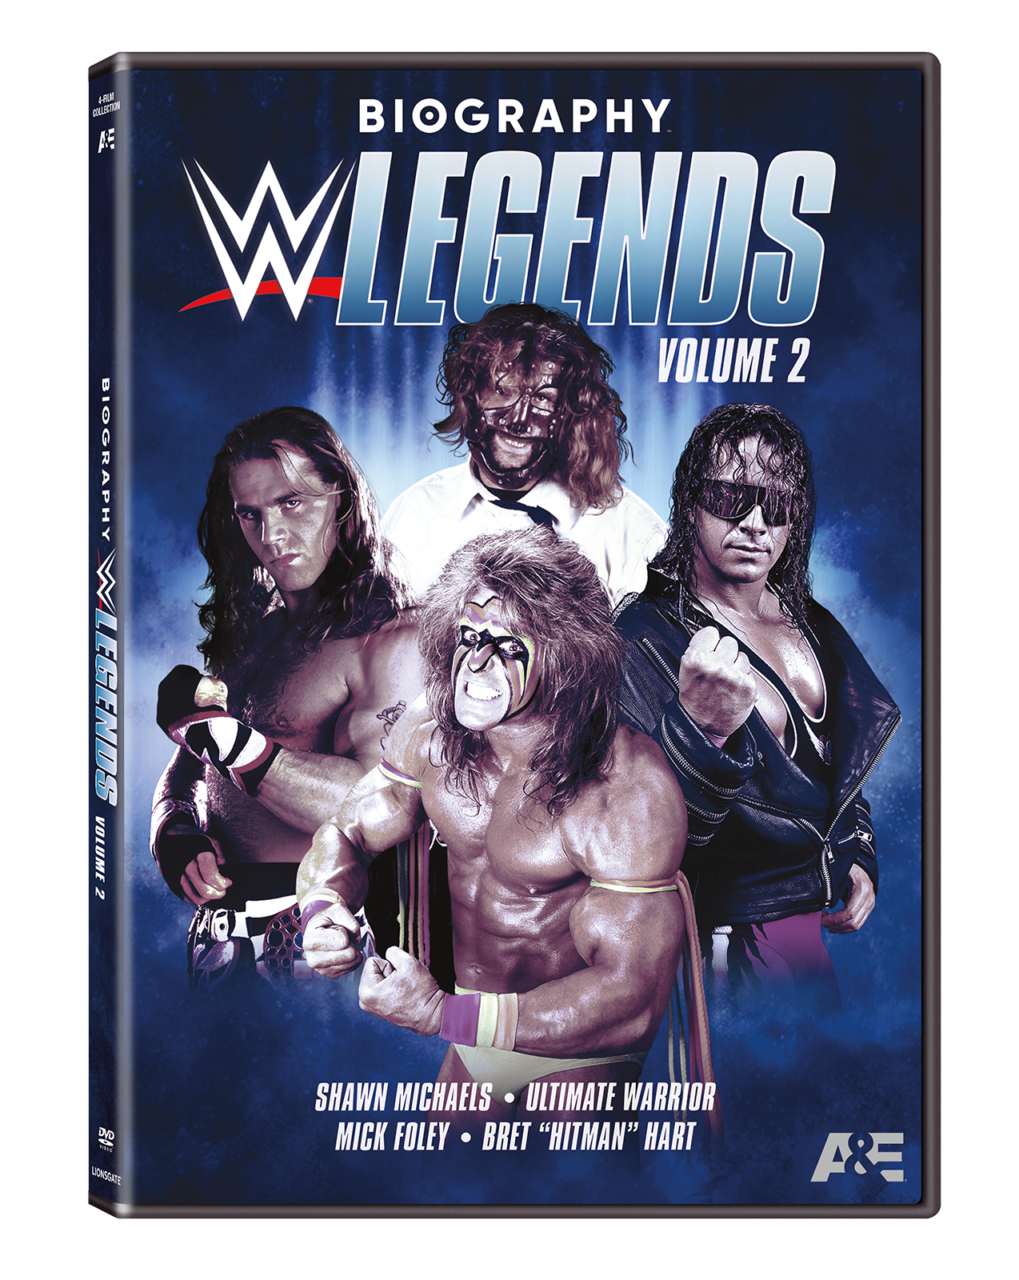 Biography: WWE Legends, Volume 2 DVD cover (Lionsgate)